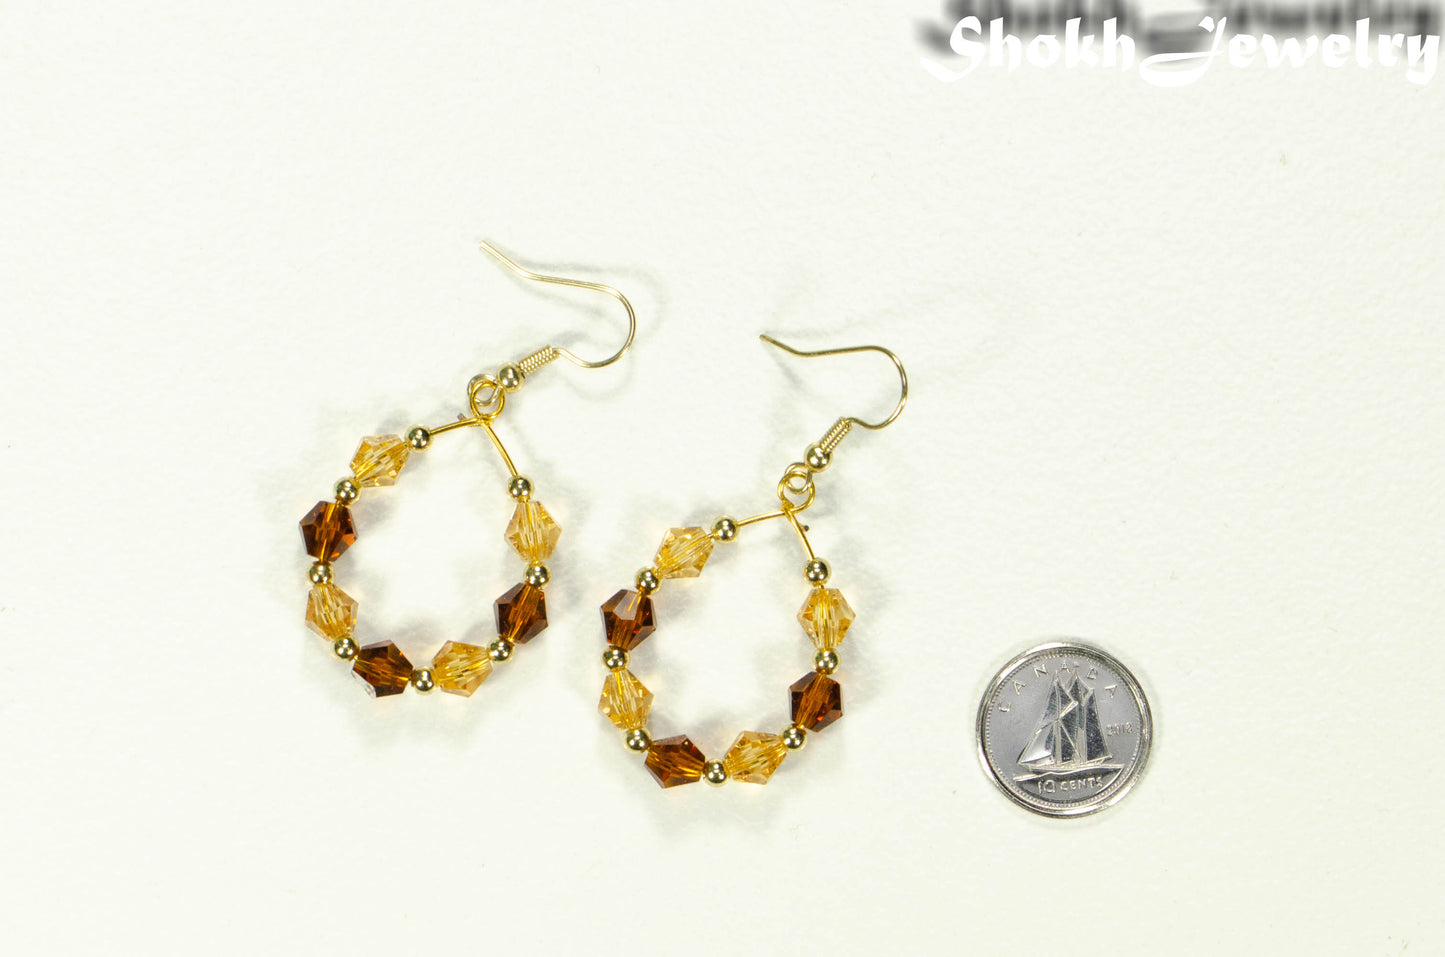 Amber and Brown Glass Crystal Hoop Earrings beside a dime.